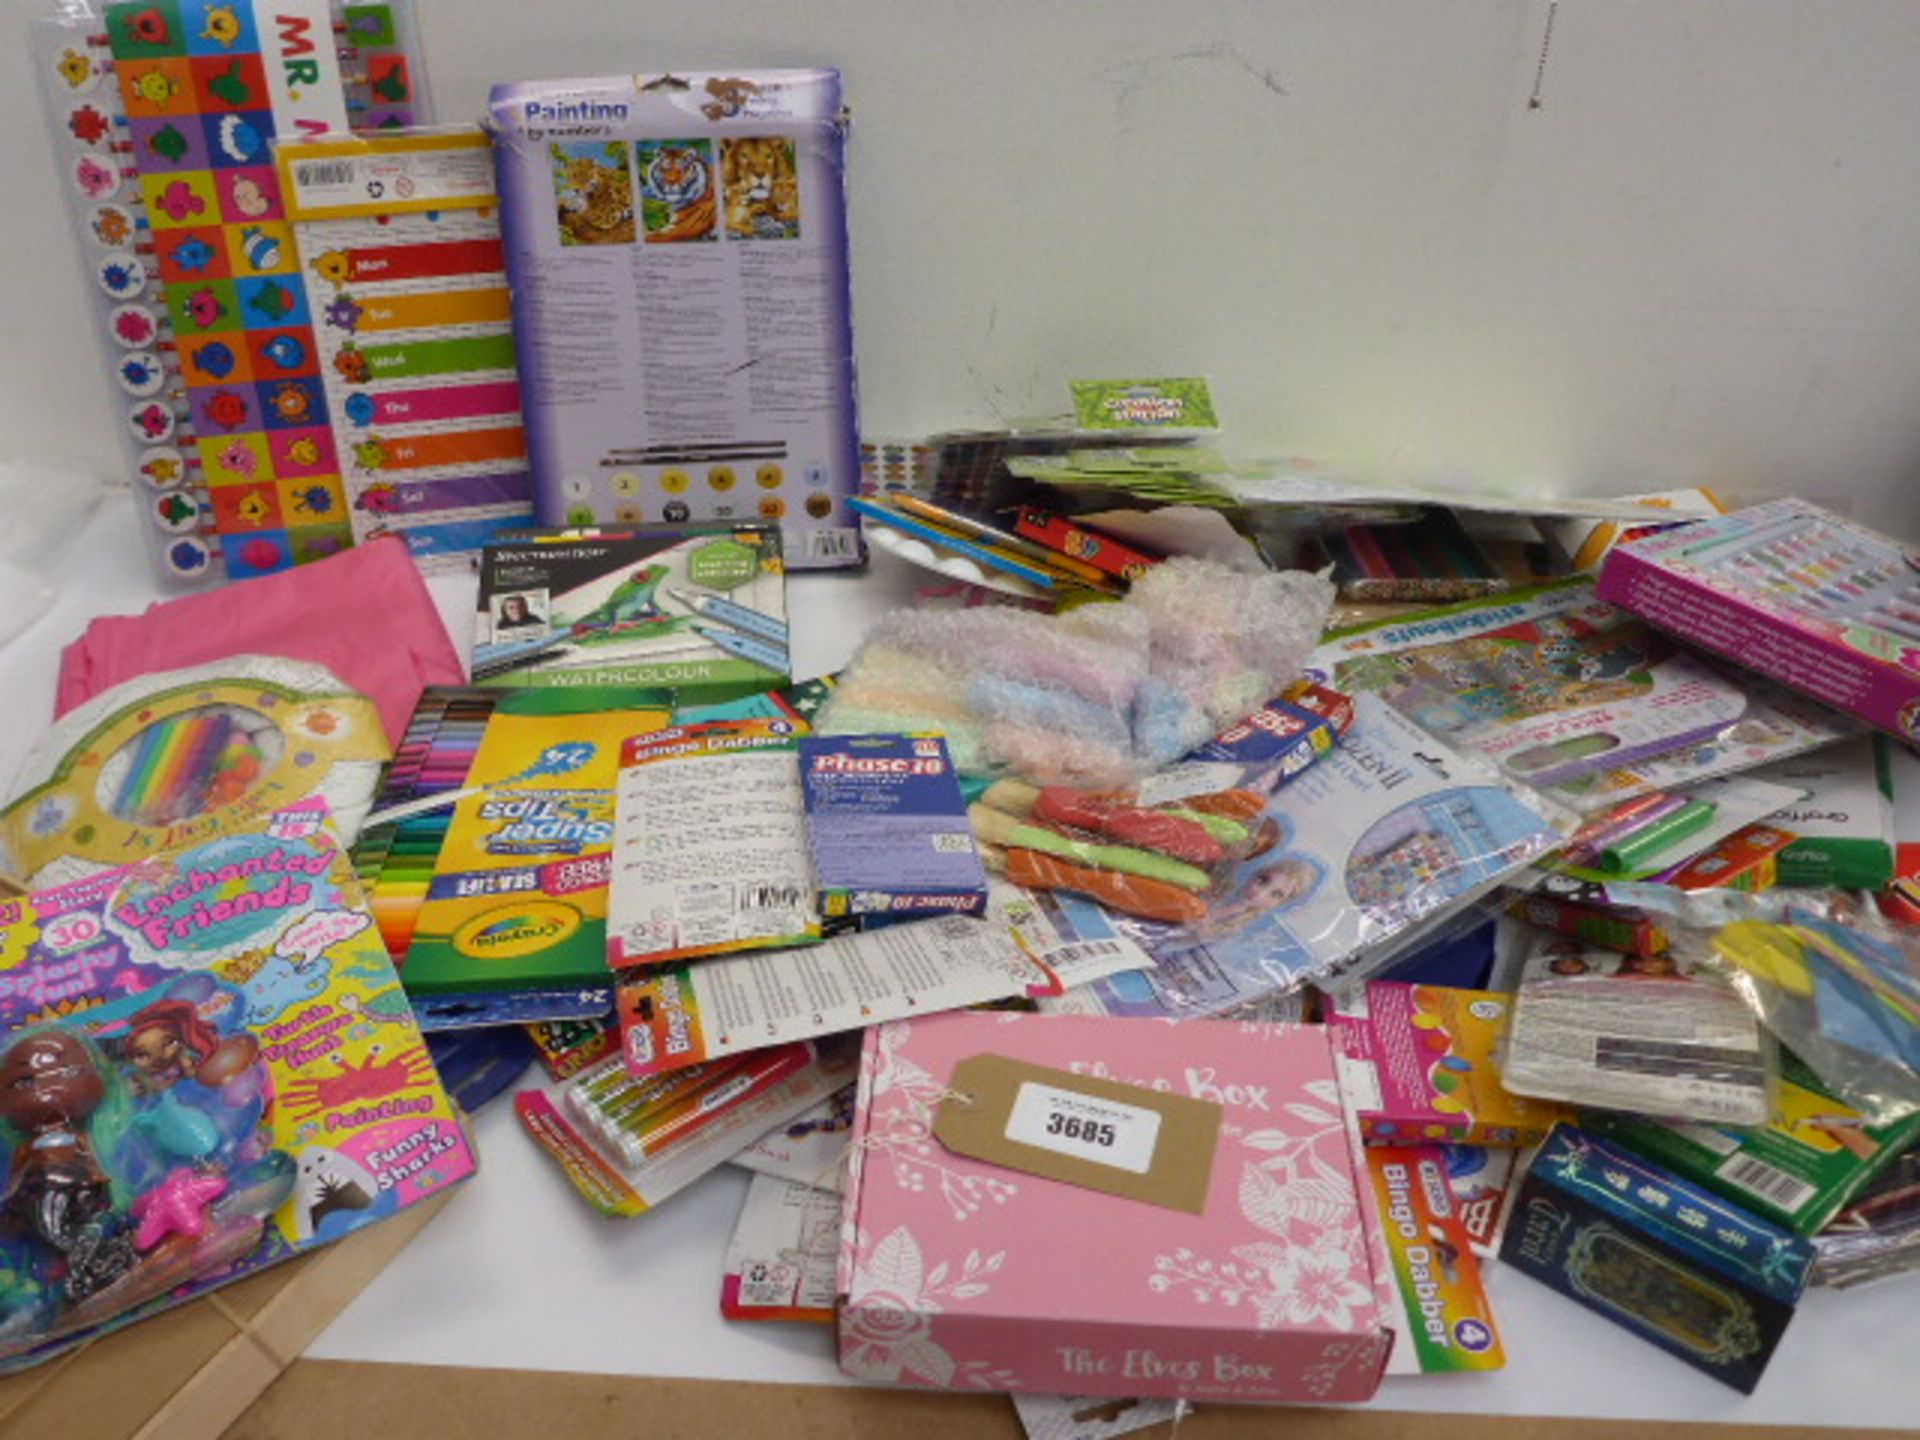 Colouring pencils, pens, chalk, paints, craft kits, activity magazines, stickers, card games etc